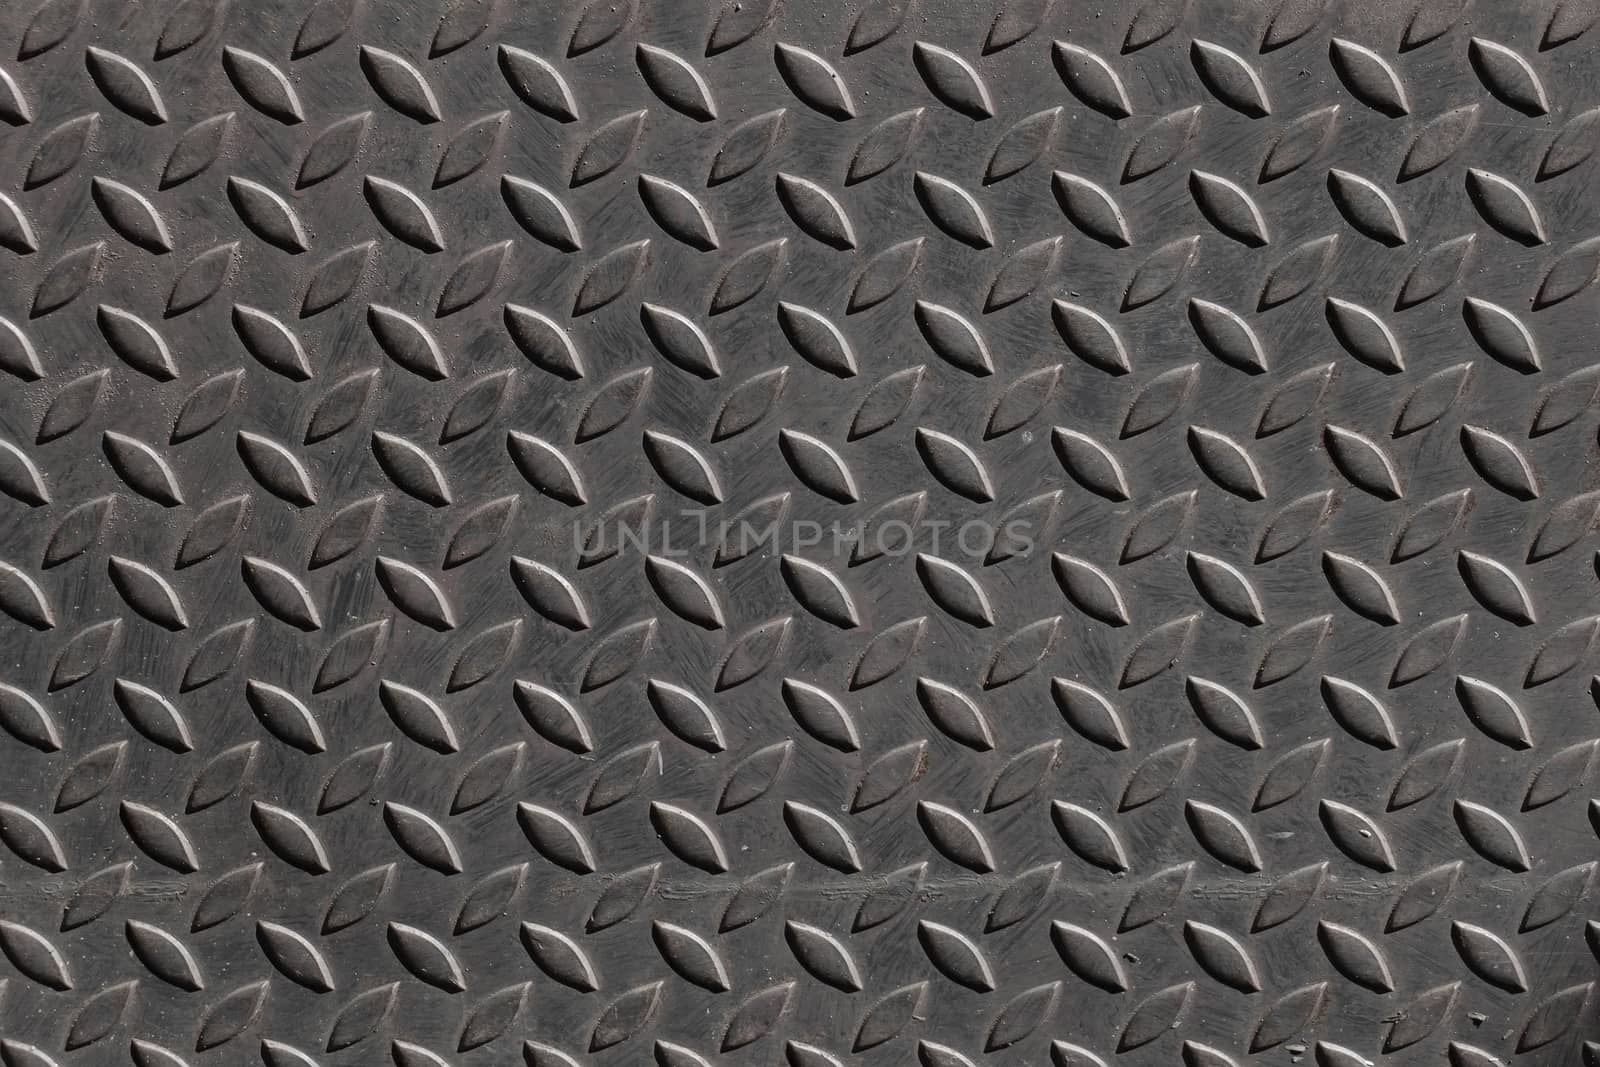 image of metal sheet texture